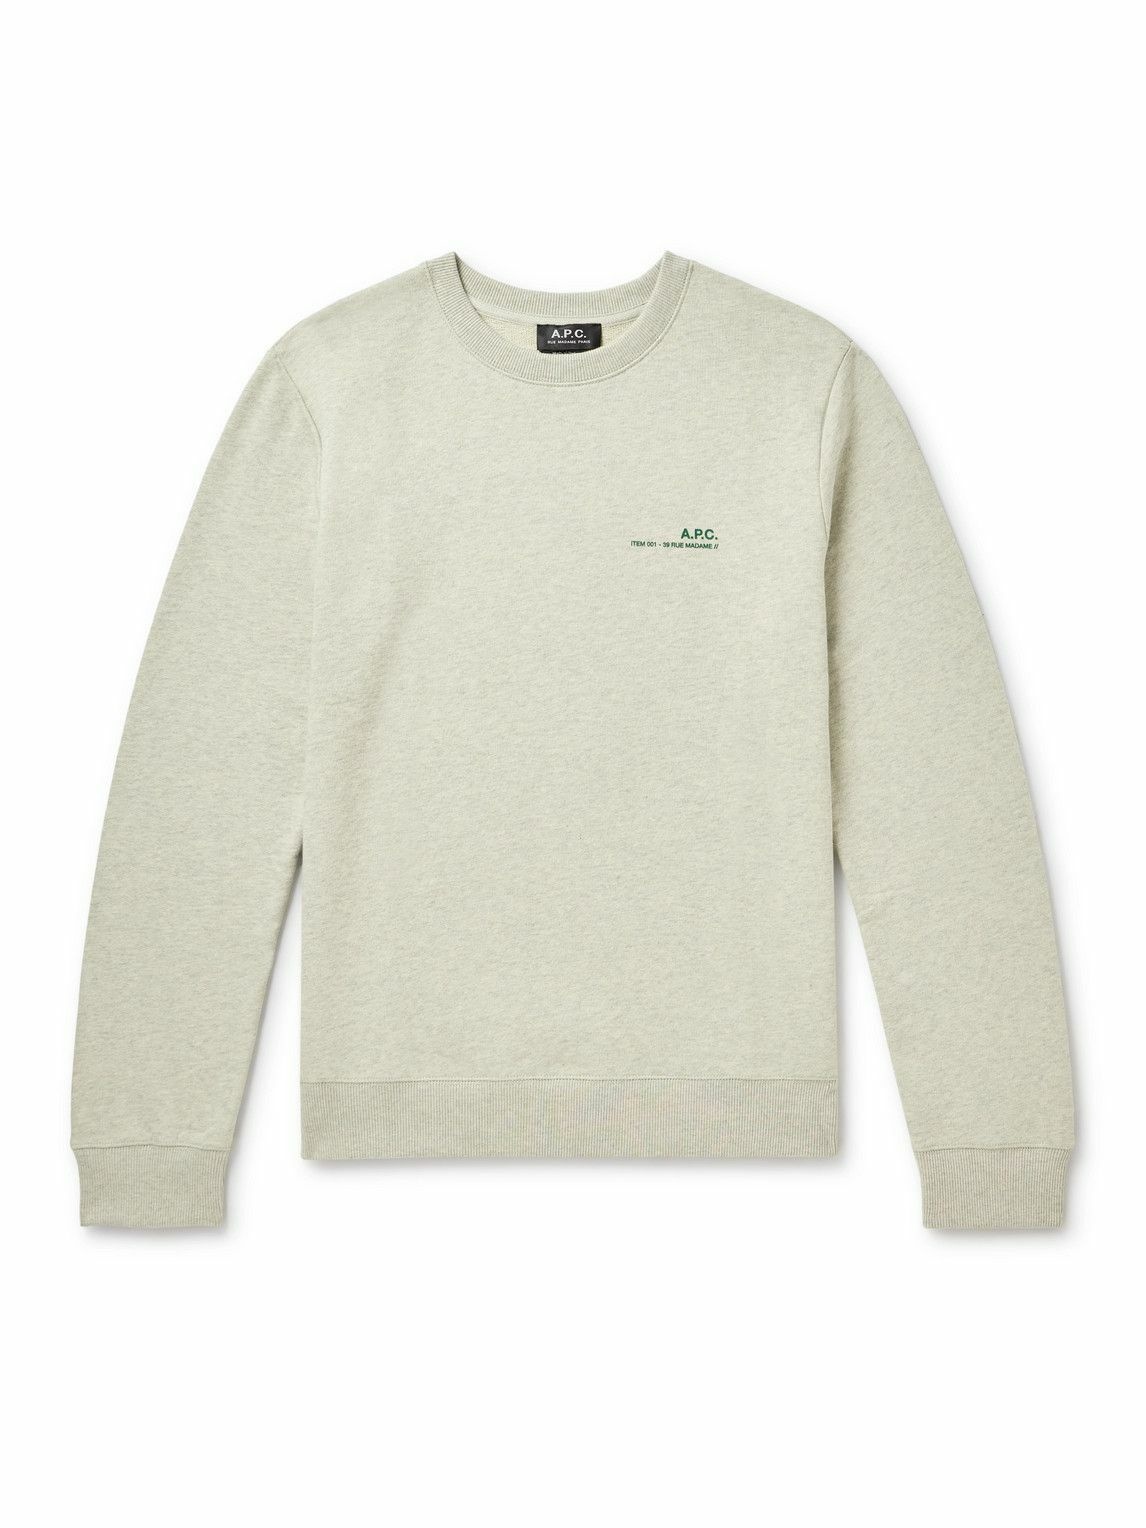 Photo: A.P.C. - Logo-Print Cotton-Jersey Sweatshirt - Gray